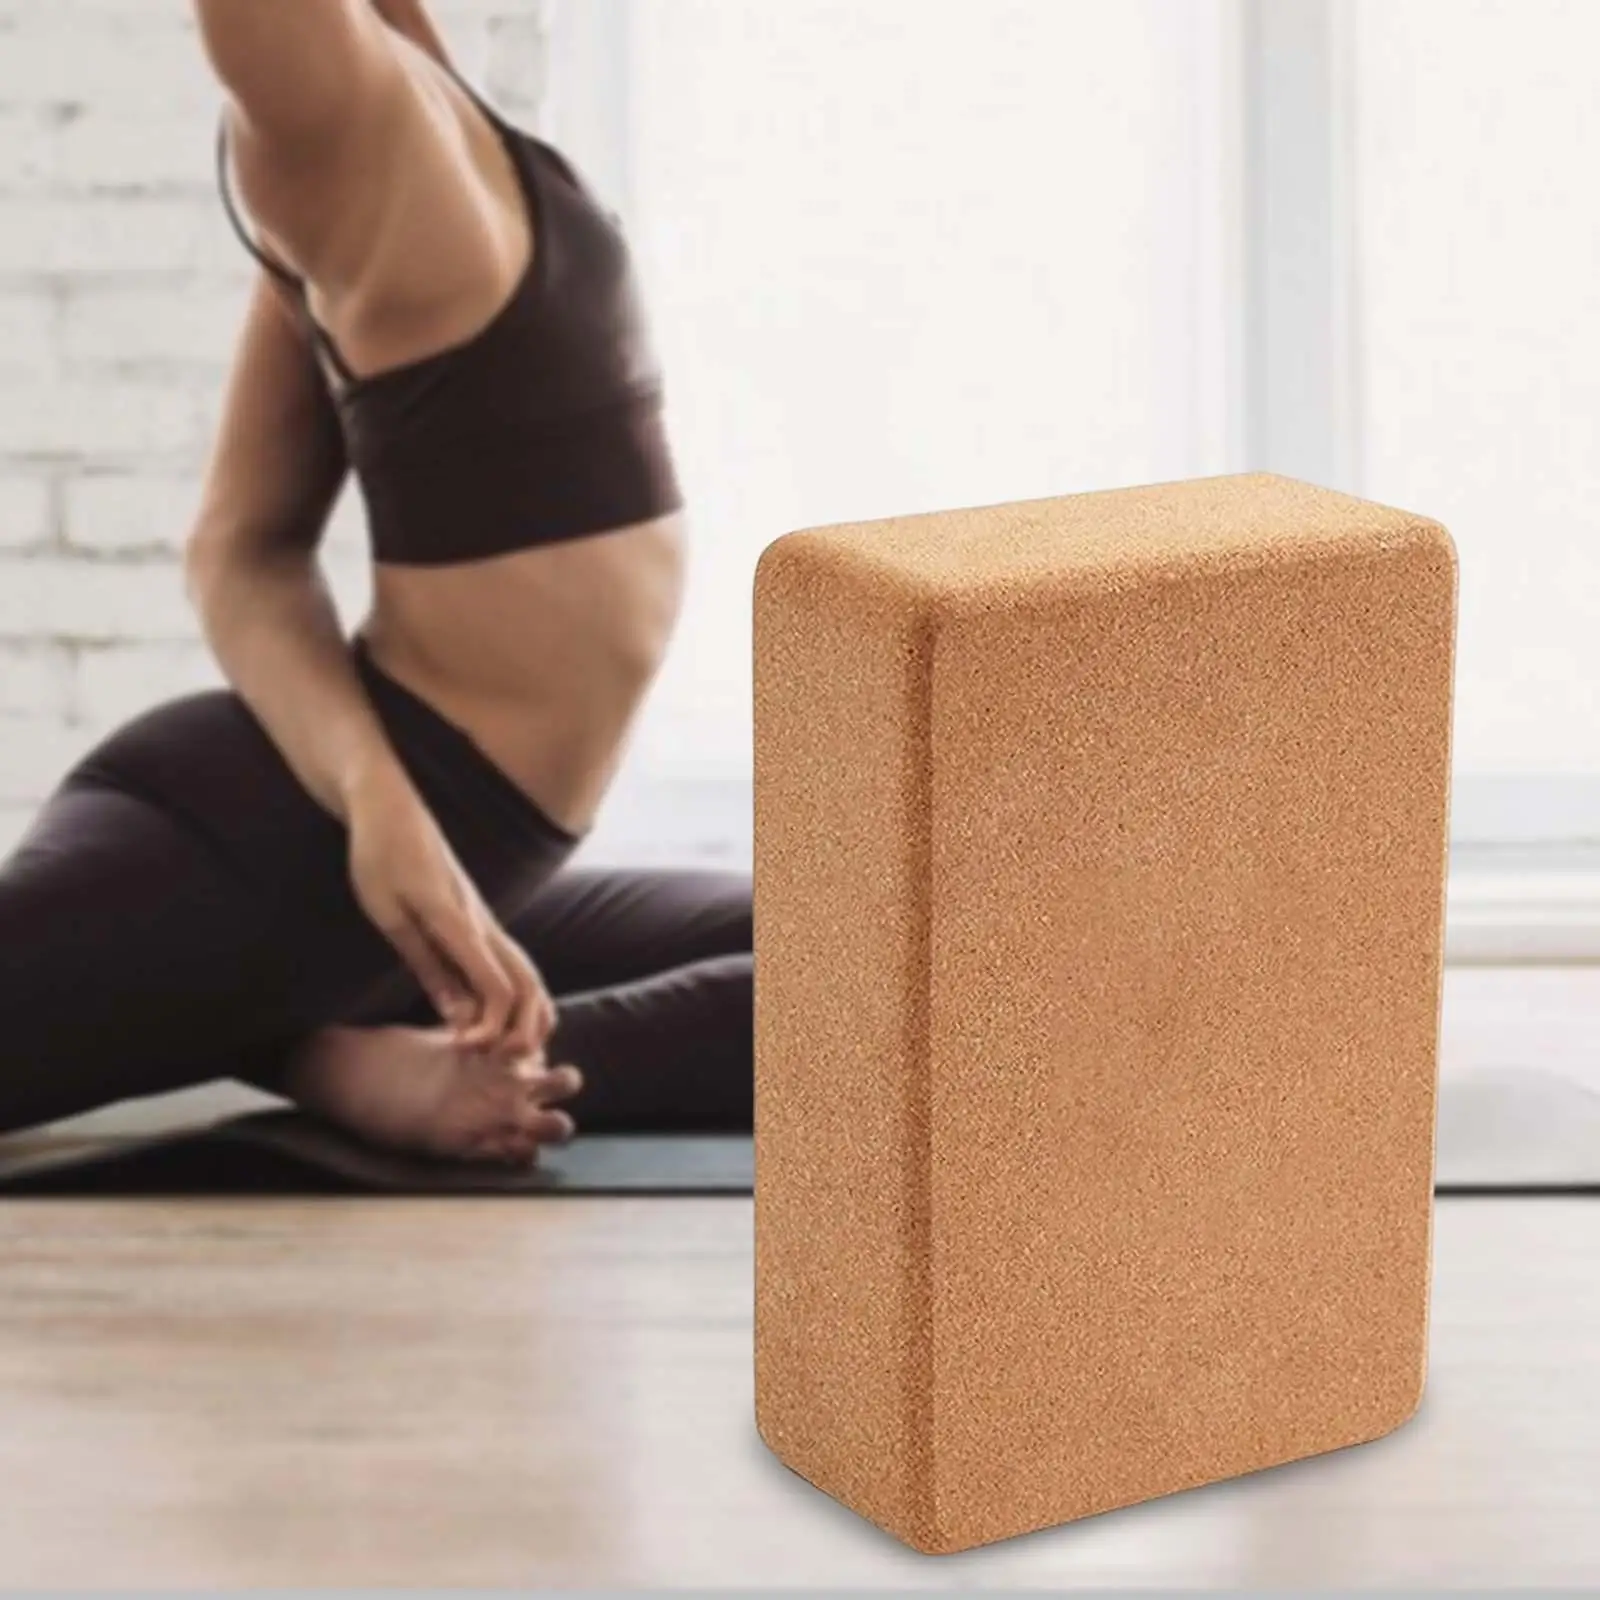 Yoga Brick Exercise Brick Meditation Soft for Stretching Indoor Sports